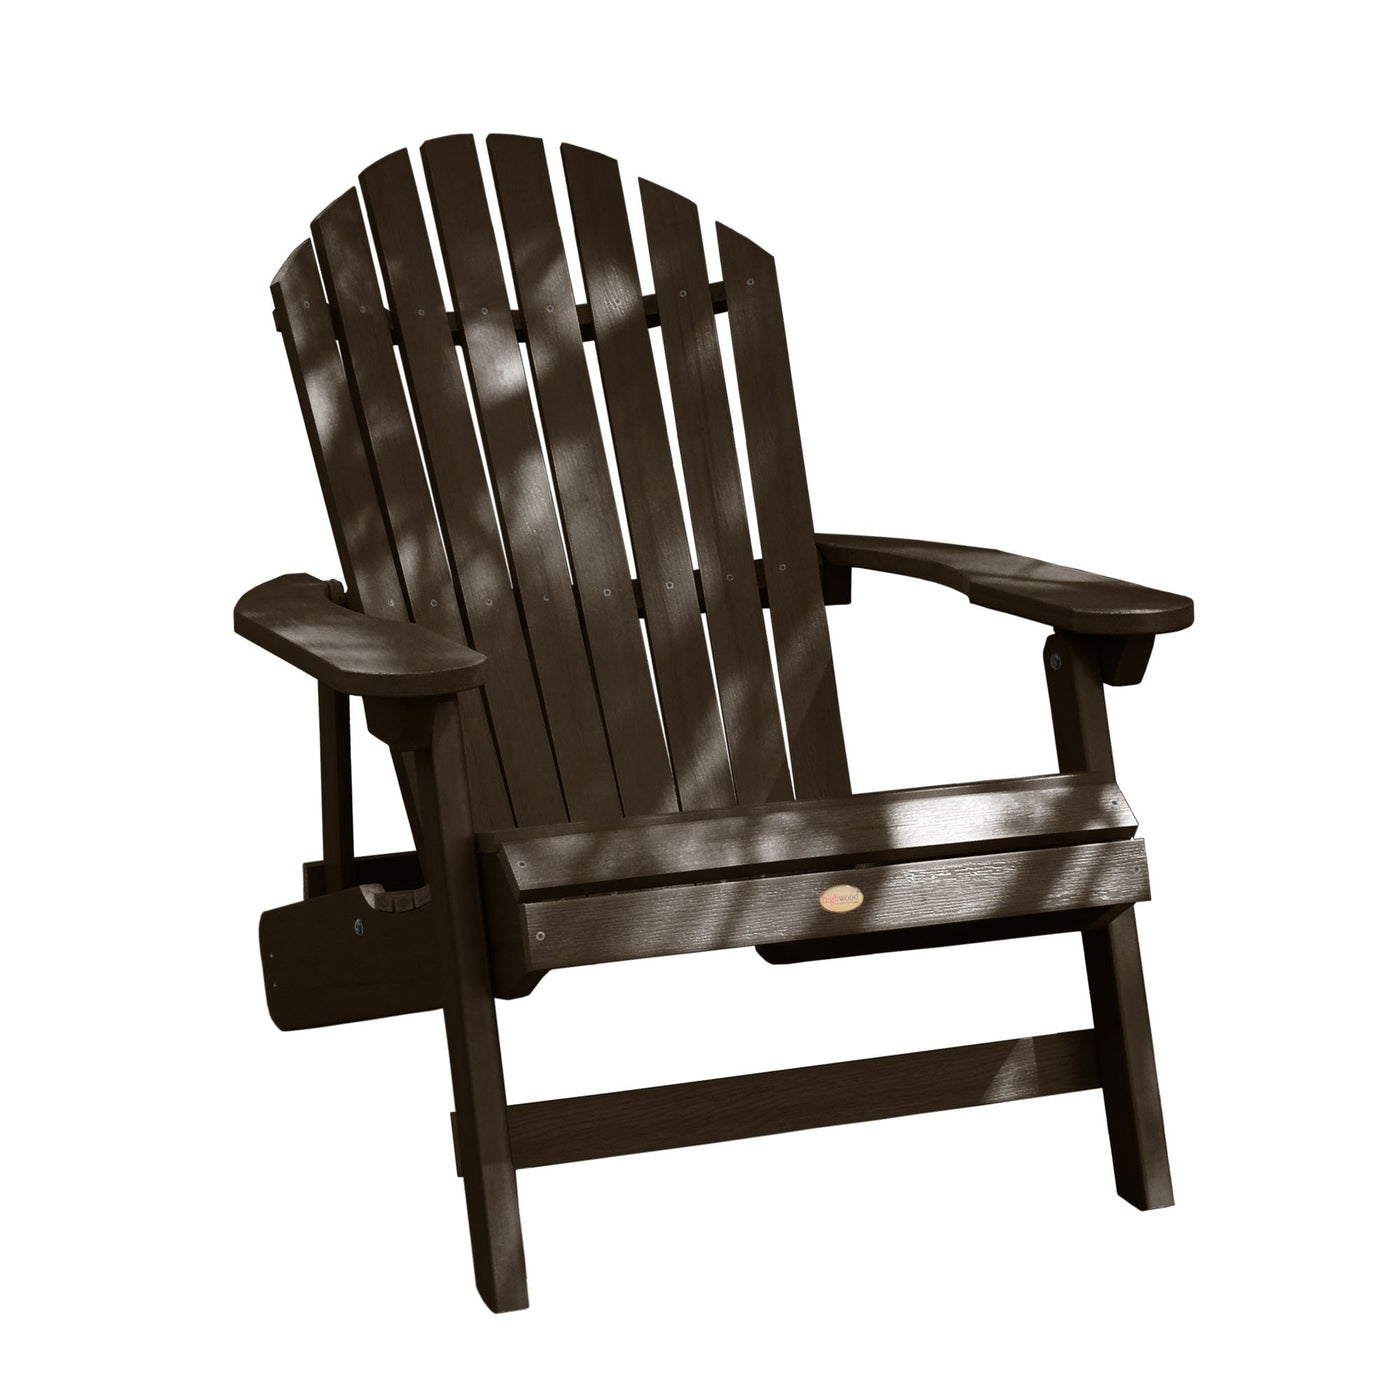 Refurbished King Hamilton Folding & Reclining Adirondack Chair Highwood USA Weathered Acorn 